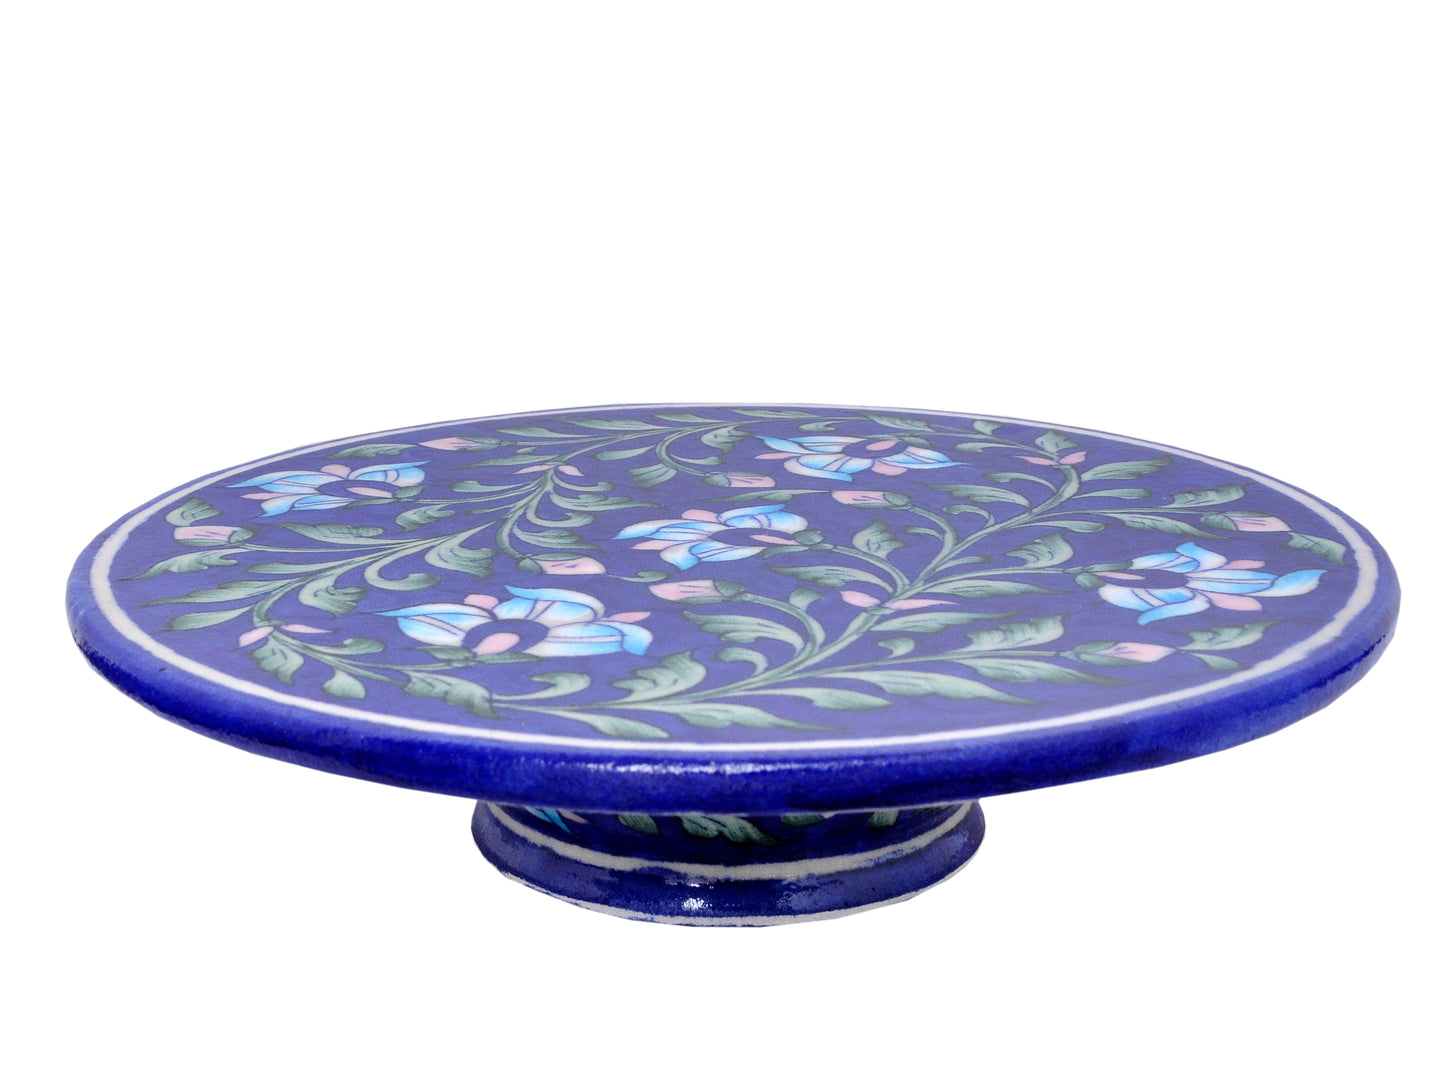 Jaipur Blue Pottery Cake Tray with Spatula